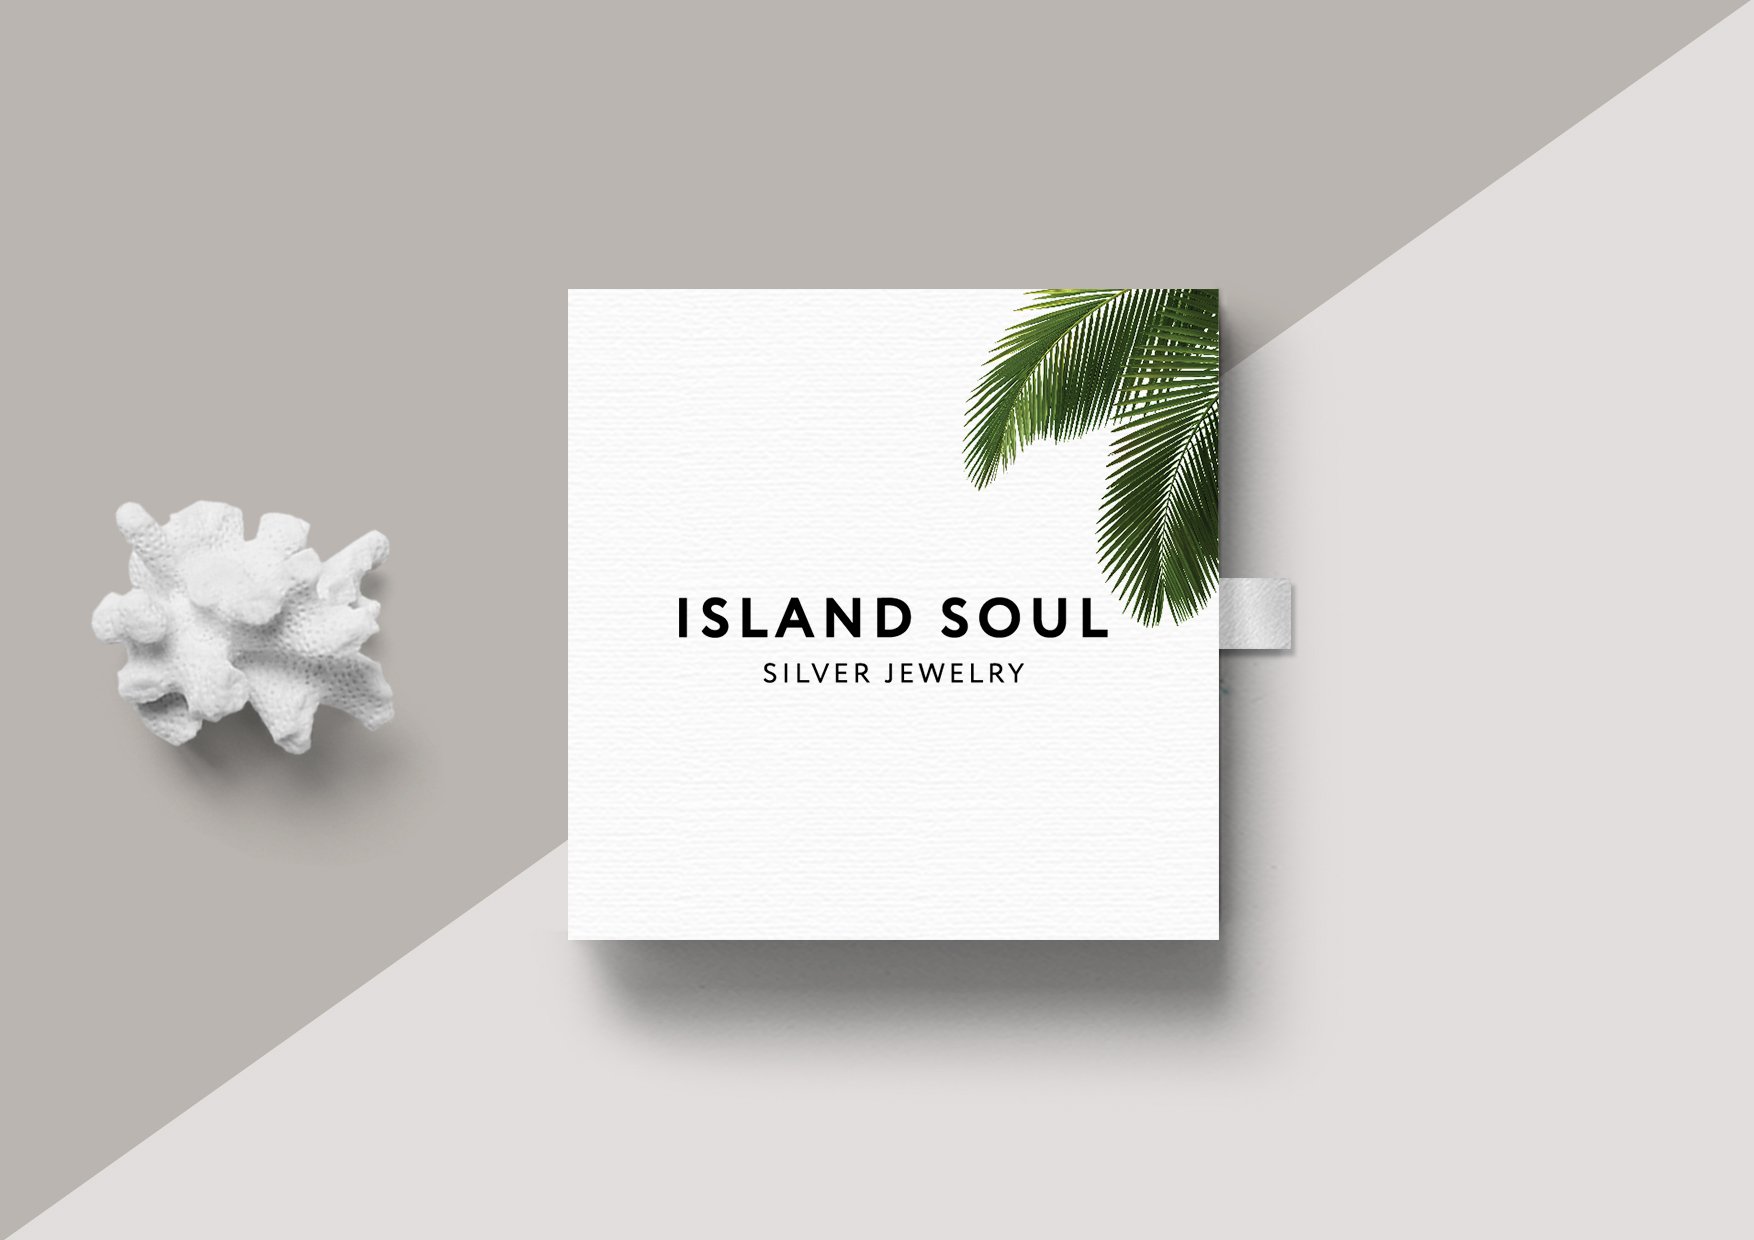 Island soul интернет магазин. Island Soul. Айленд соул джеверли. Island Soul логотип. Island Soul украшения.